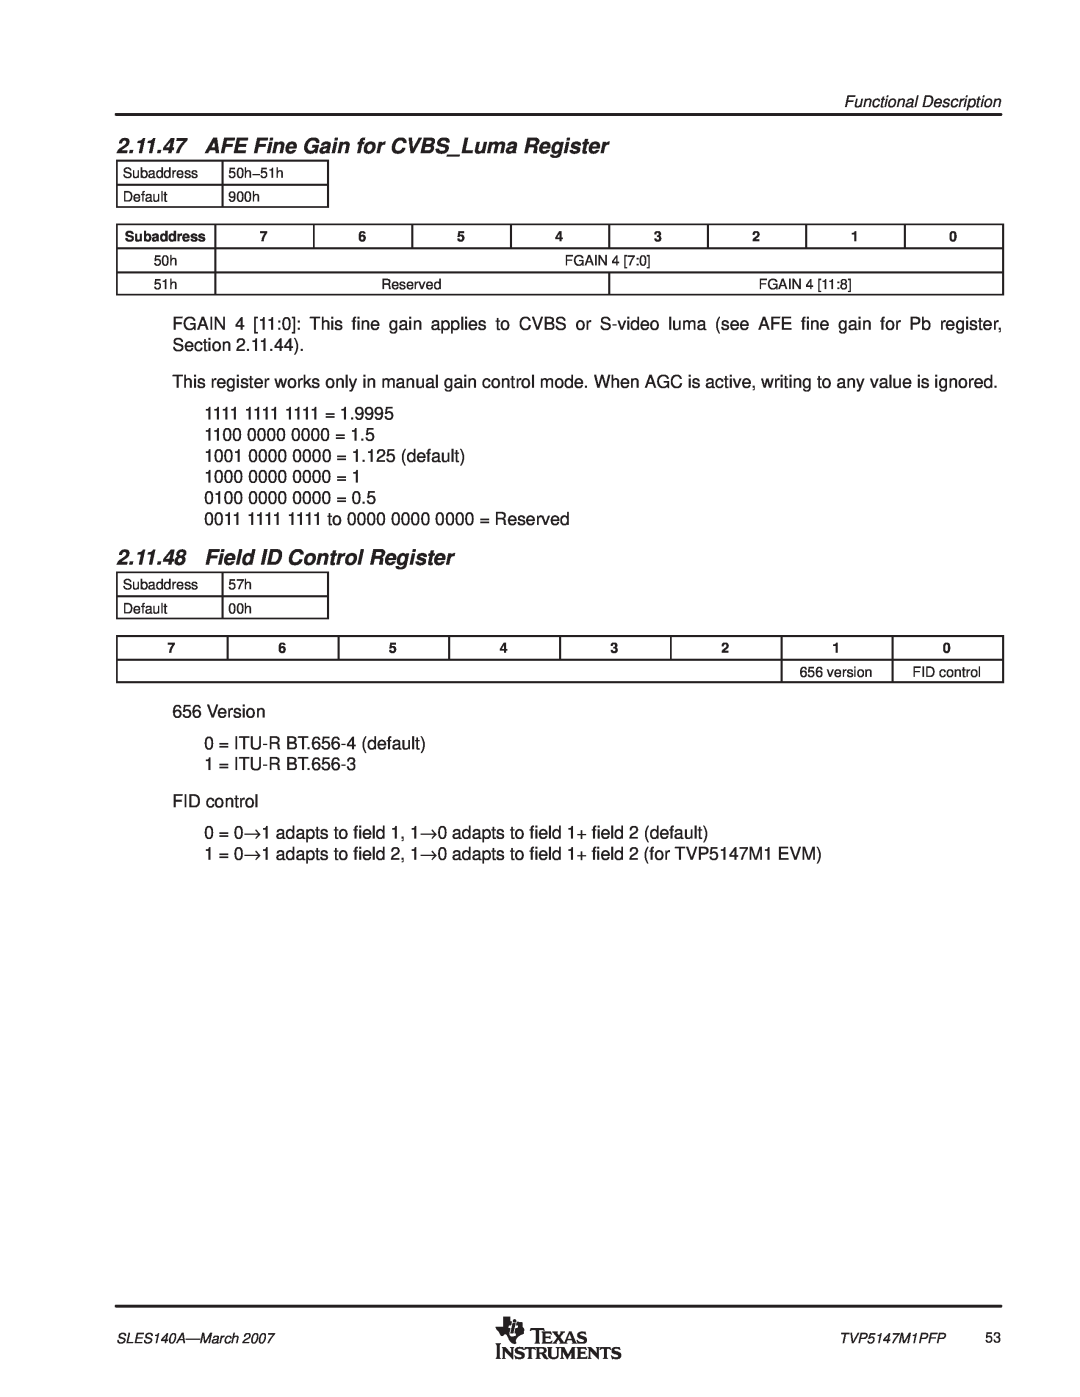 Texas Instruments TVP5147M1PFP manual AFE Fine Gain for CVBSLuma Register, Field ID Control Register, version 